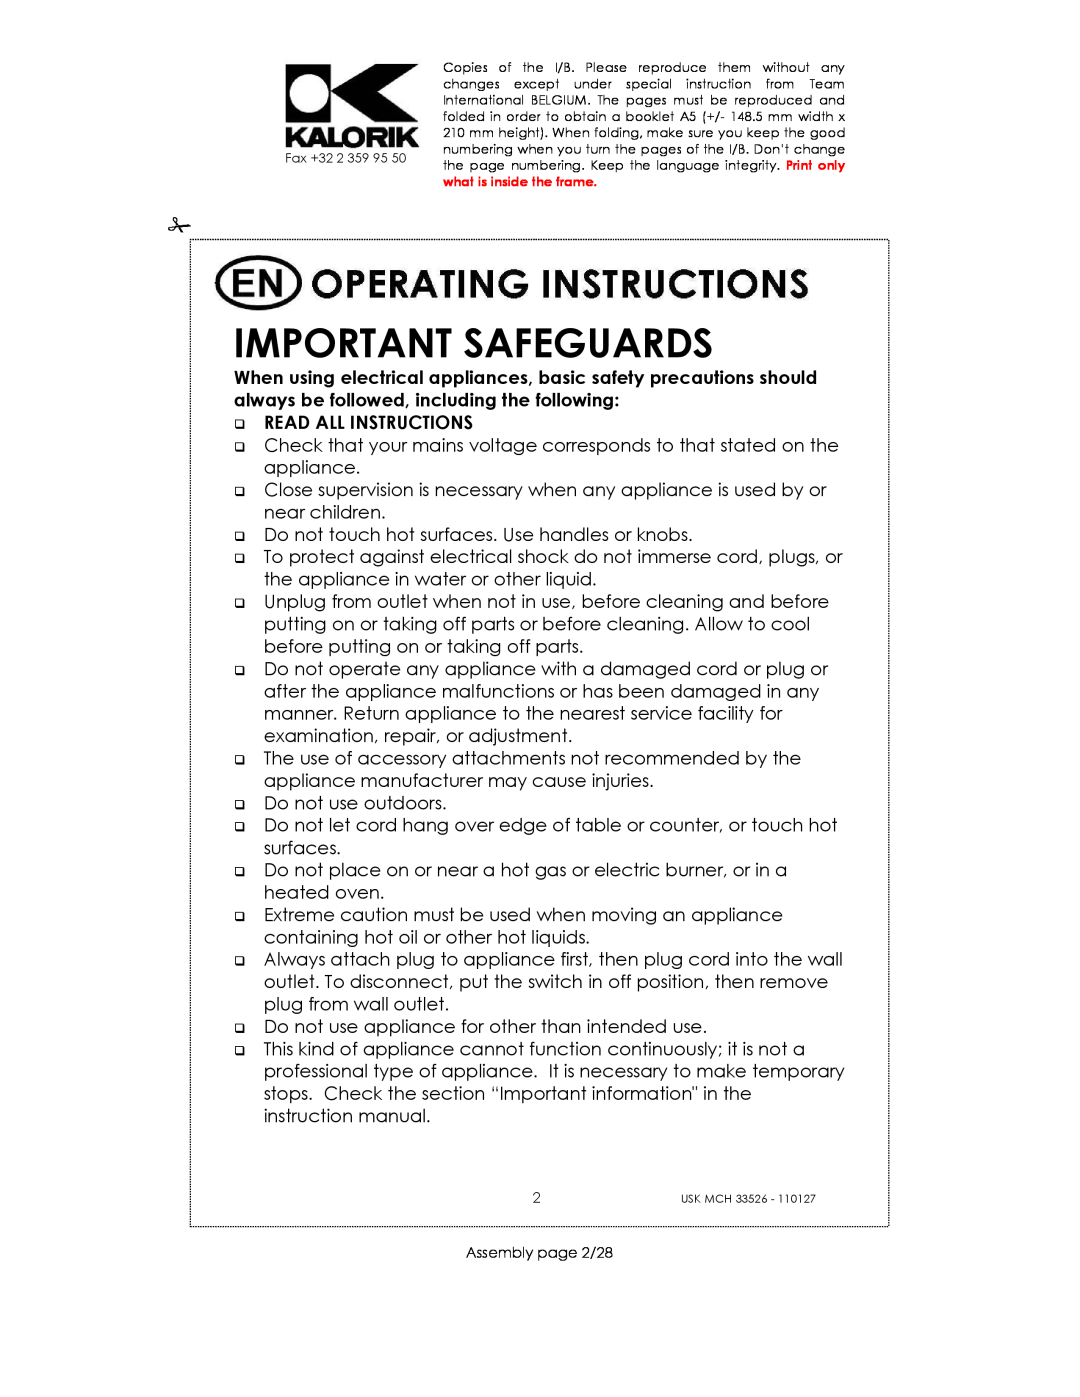 Kalorik USK MCH 33526 manual Important Safeguards, Read All Instructions 